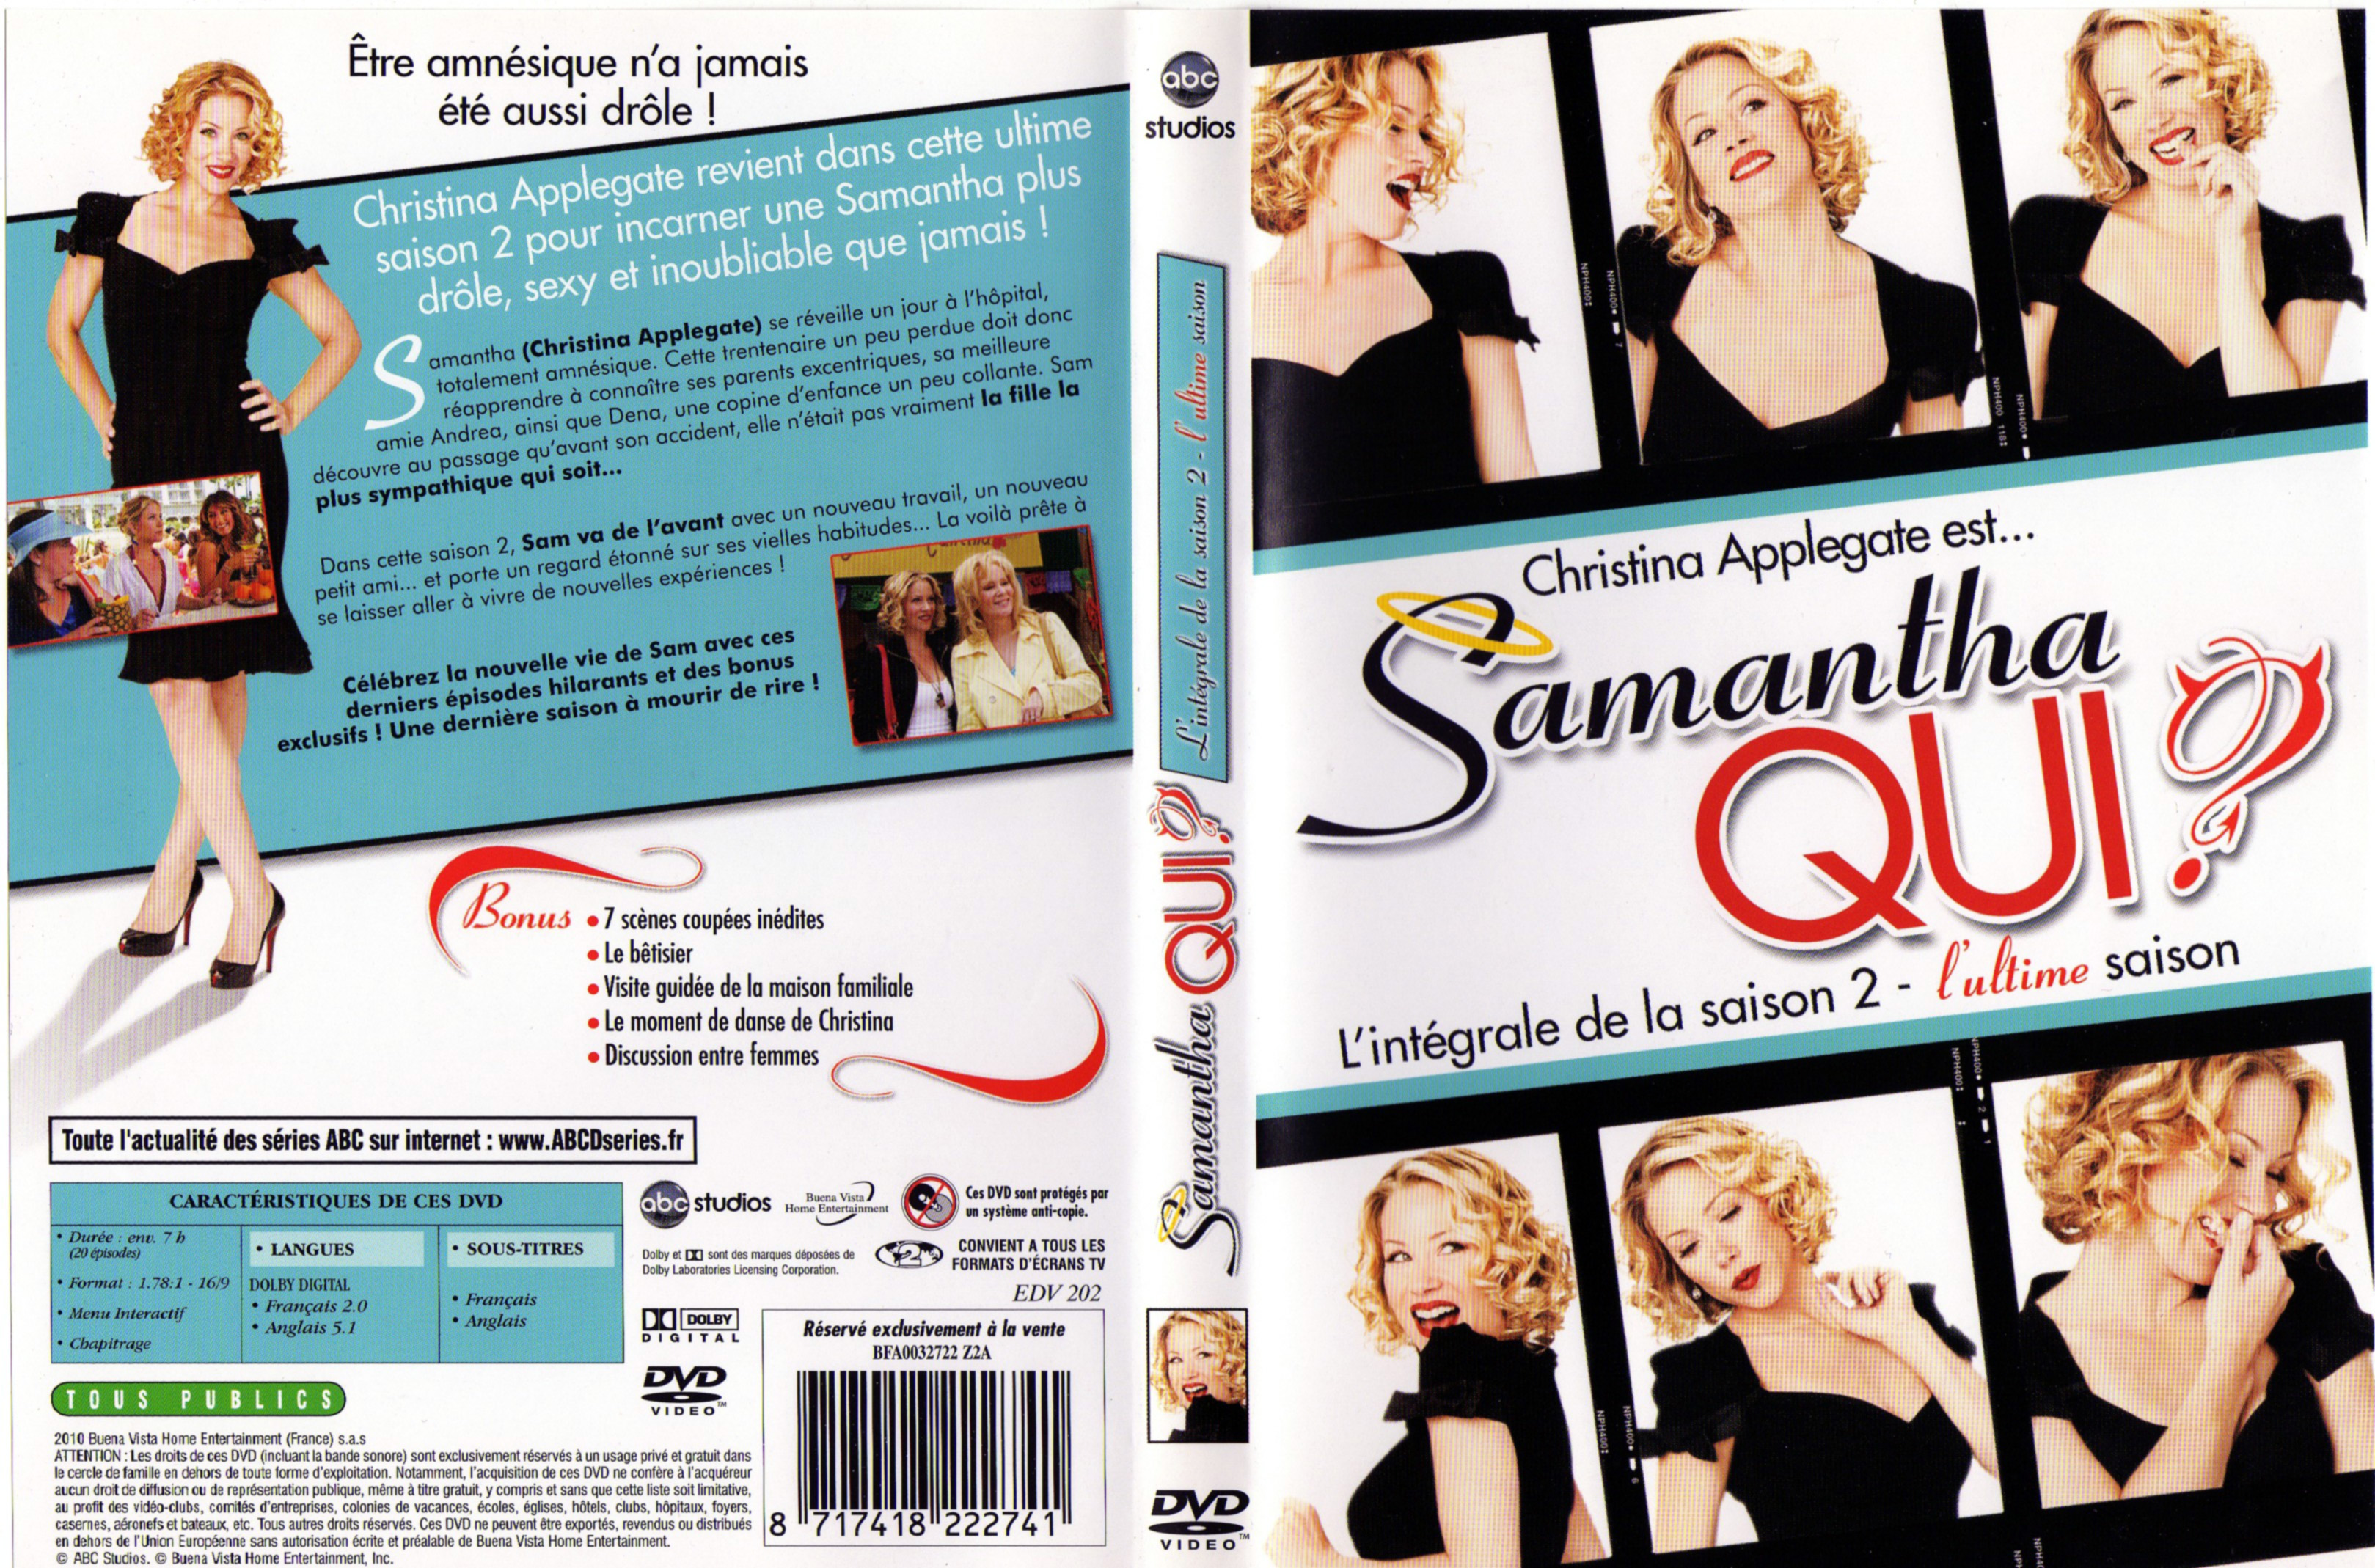 Jaquette DVD Samantha qui Saison 2